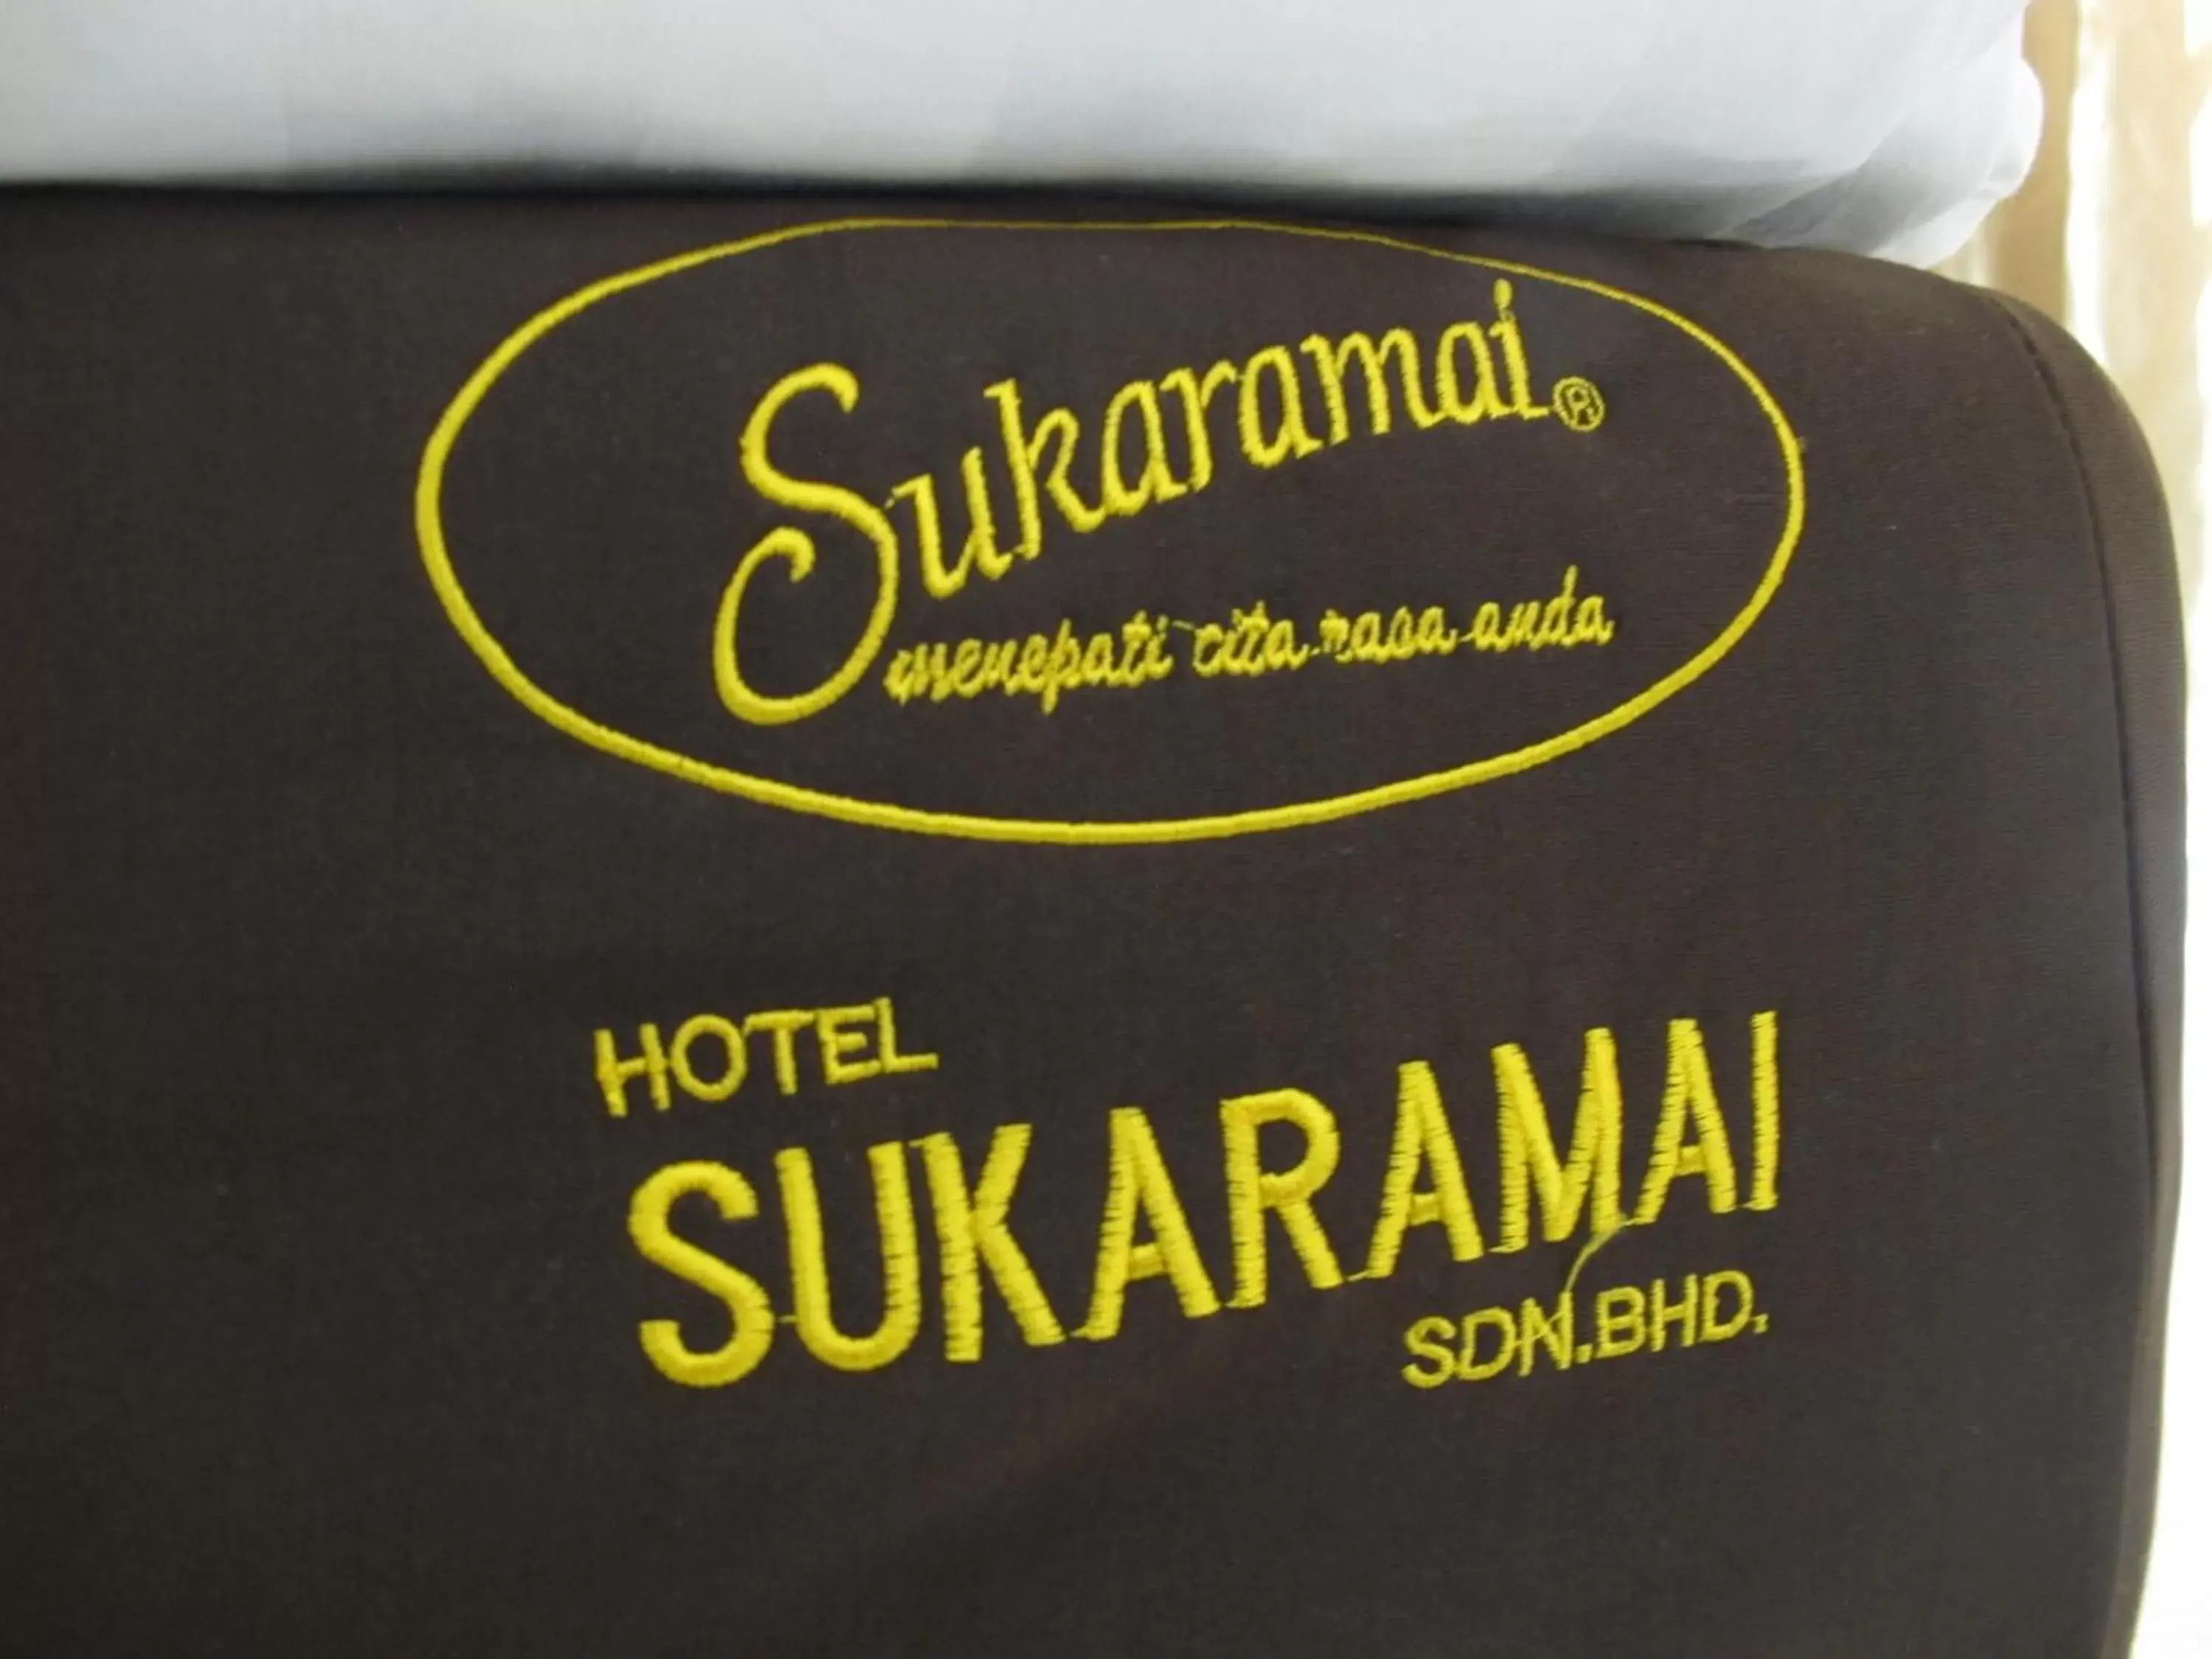 HOTEL SUKARAMAI